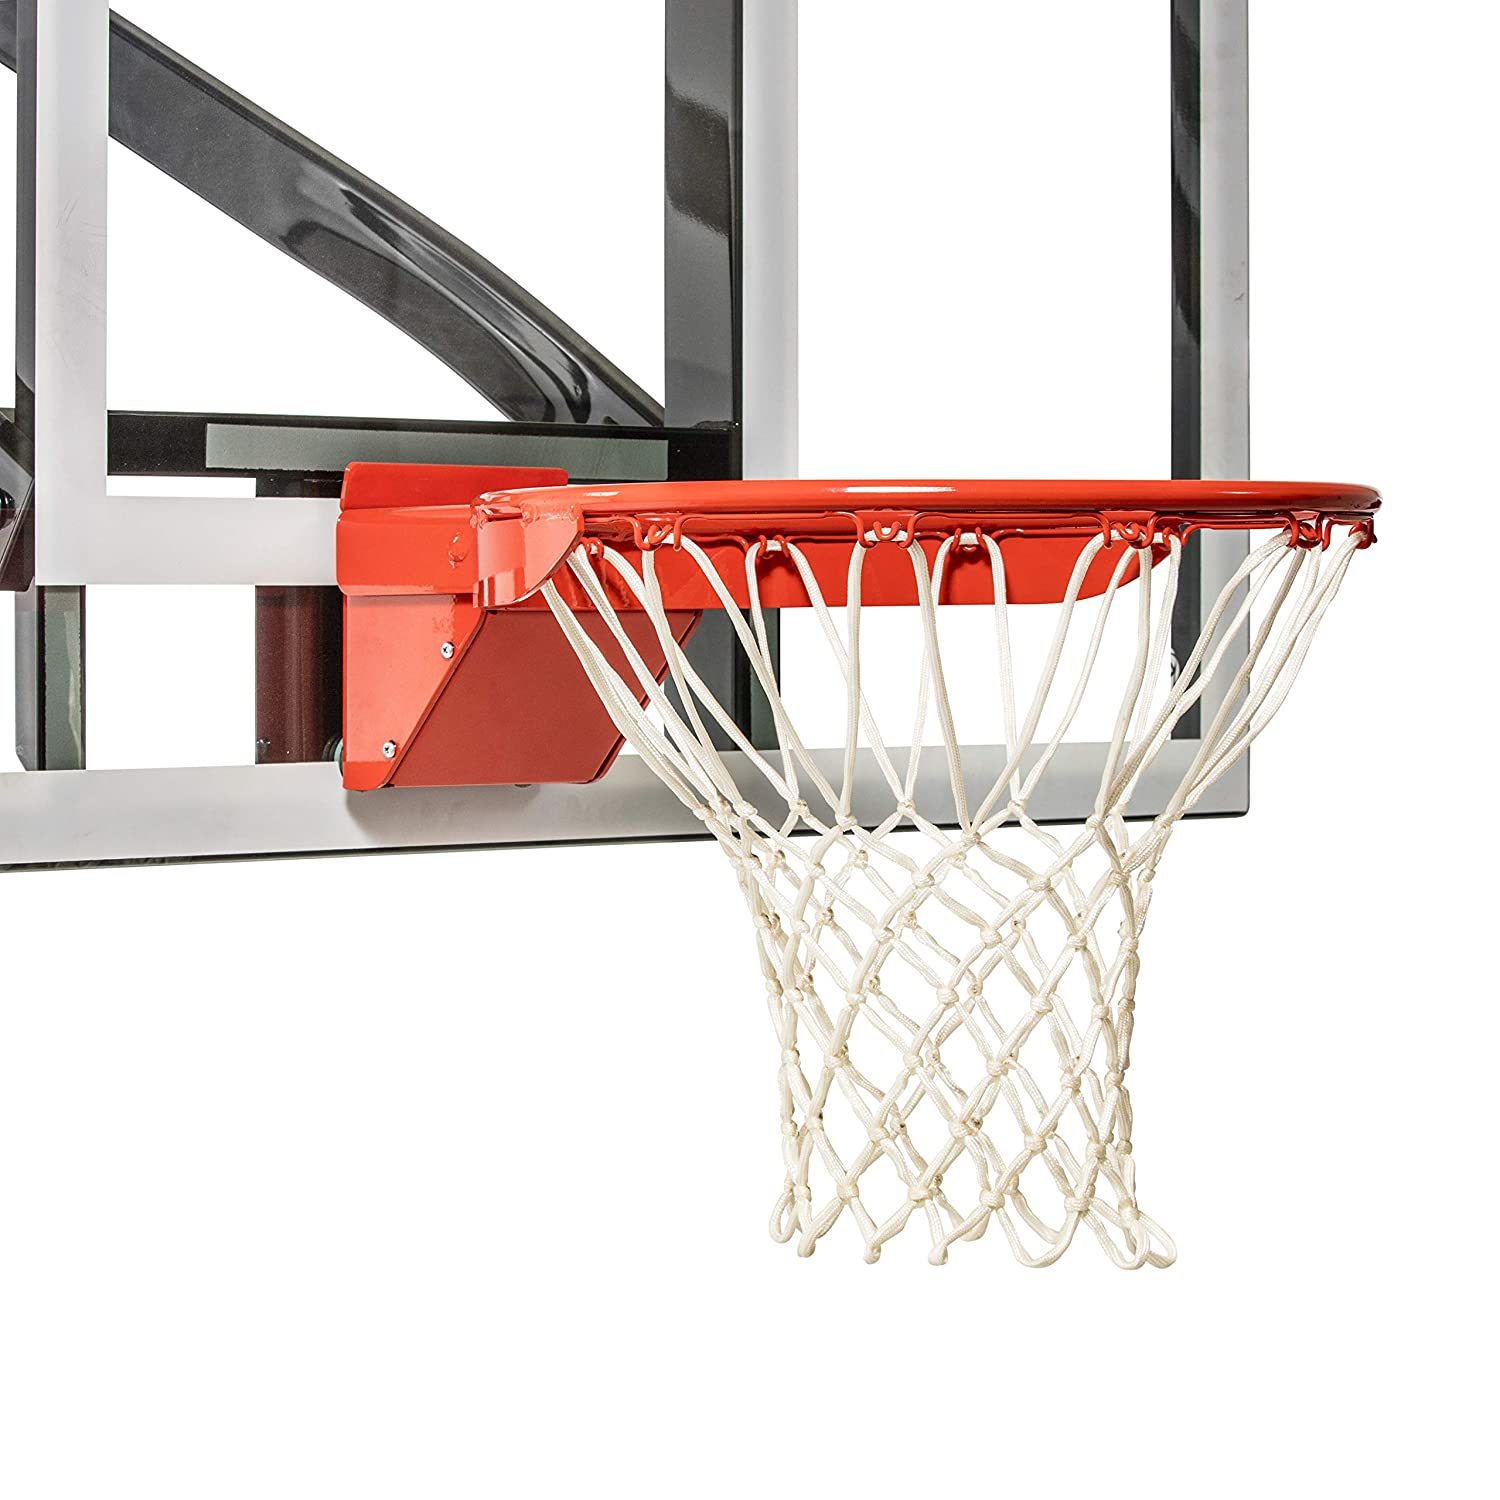 Hd Breakaway Single Sp Basketball Rim Includes Mounting Hardware And N